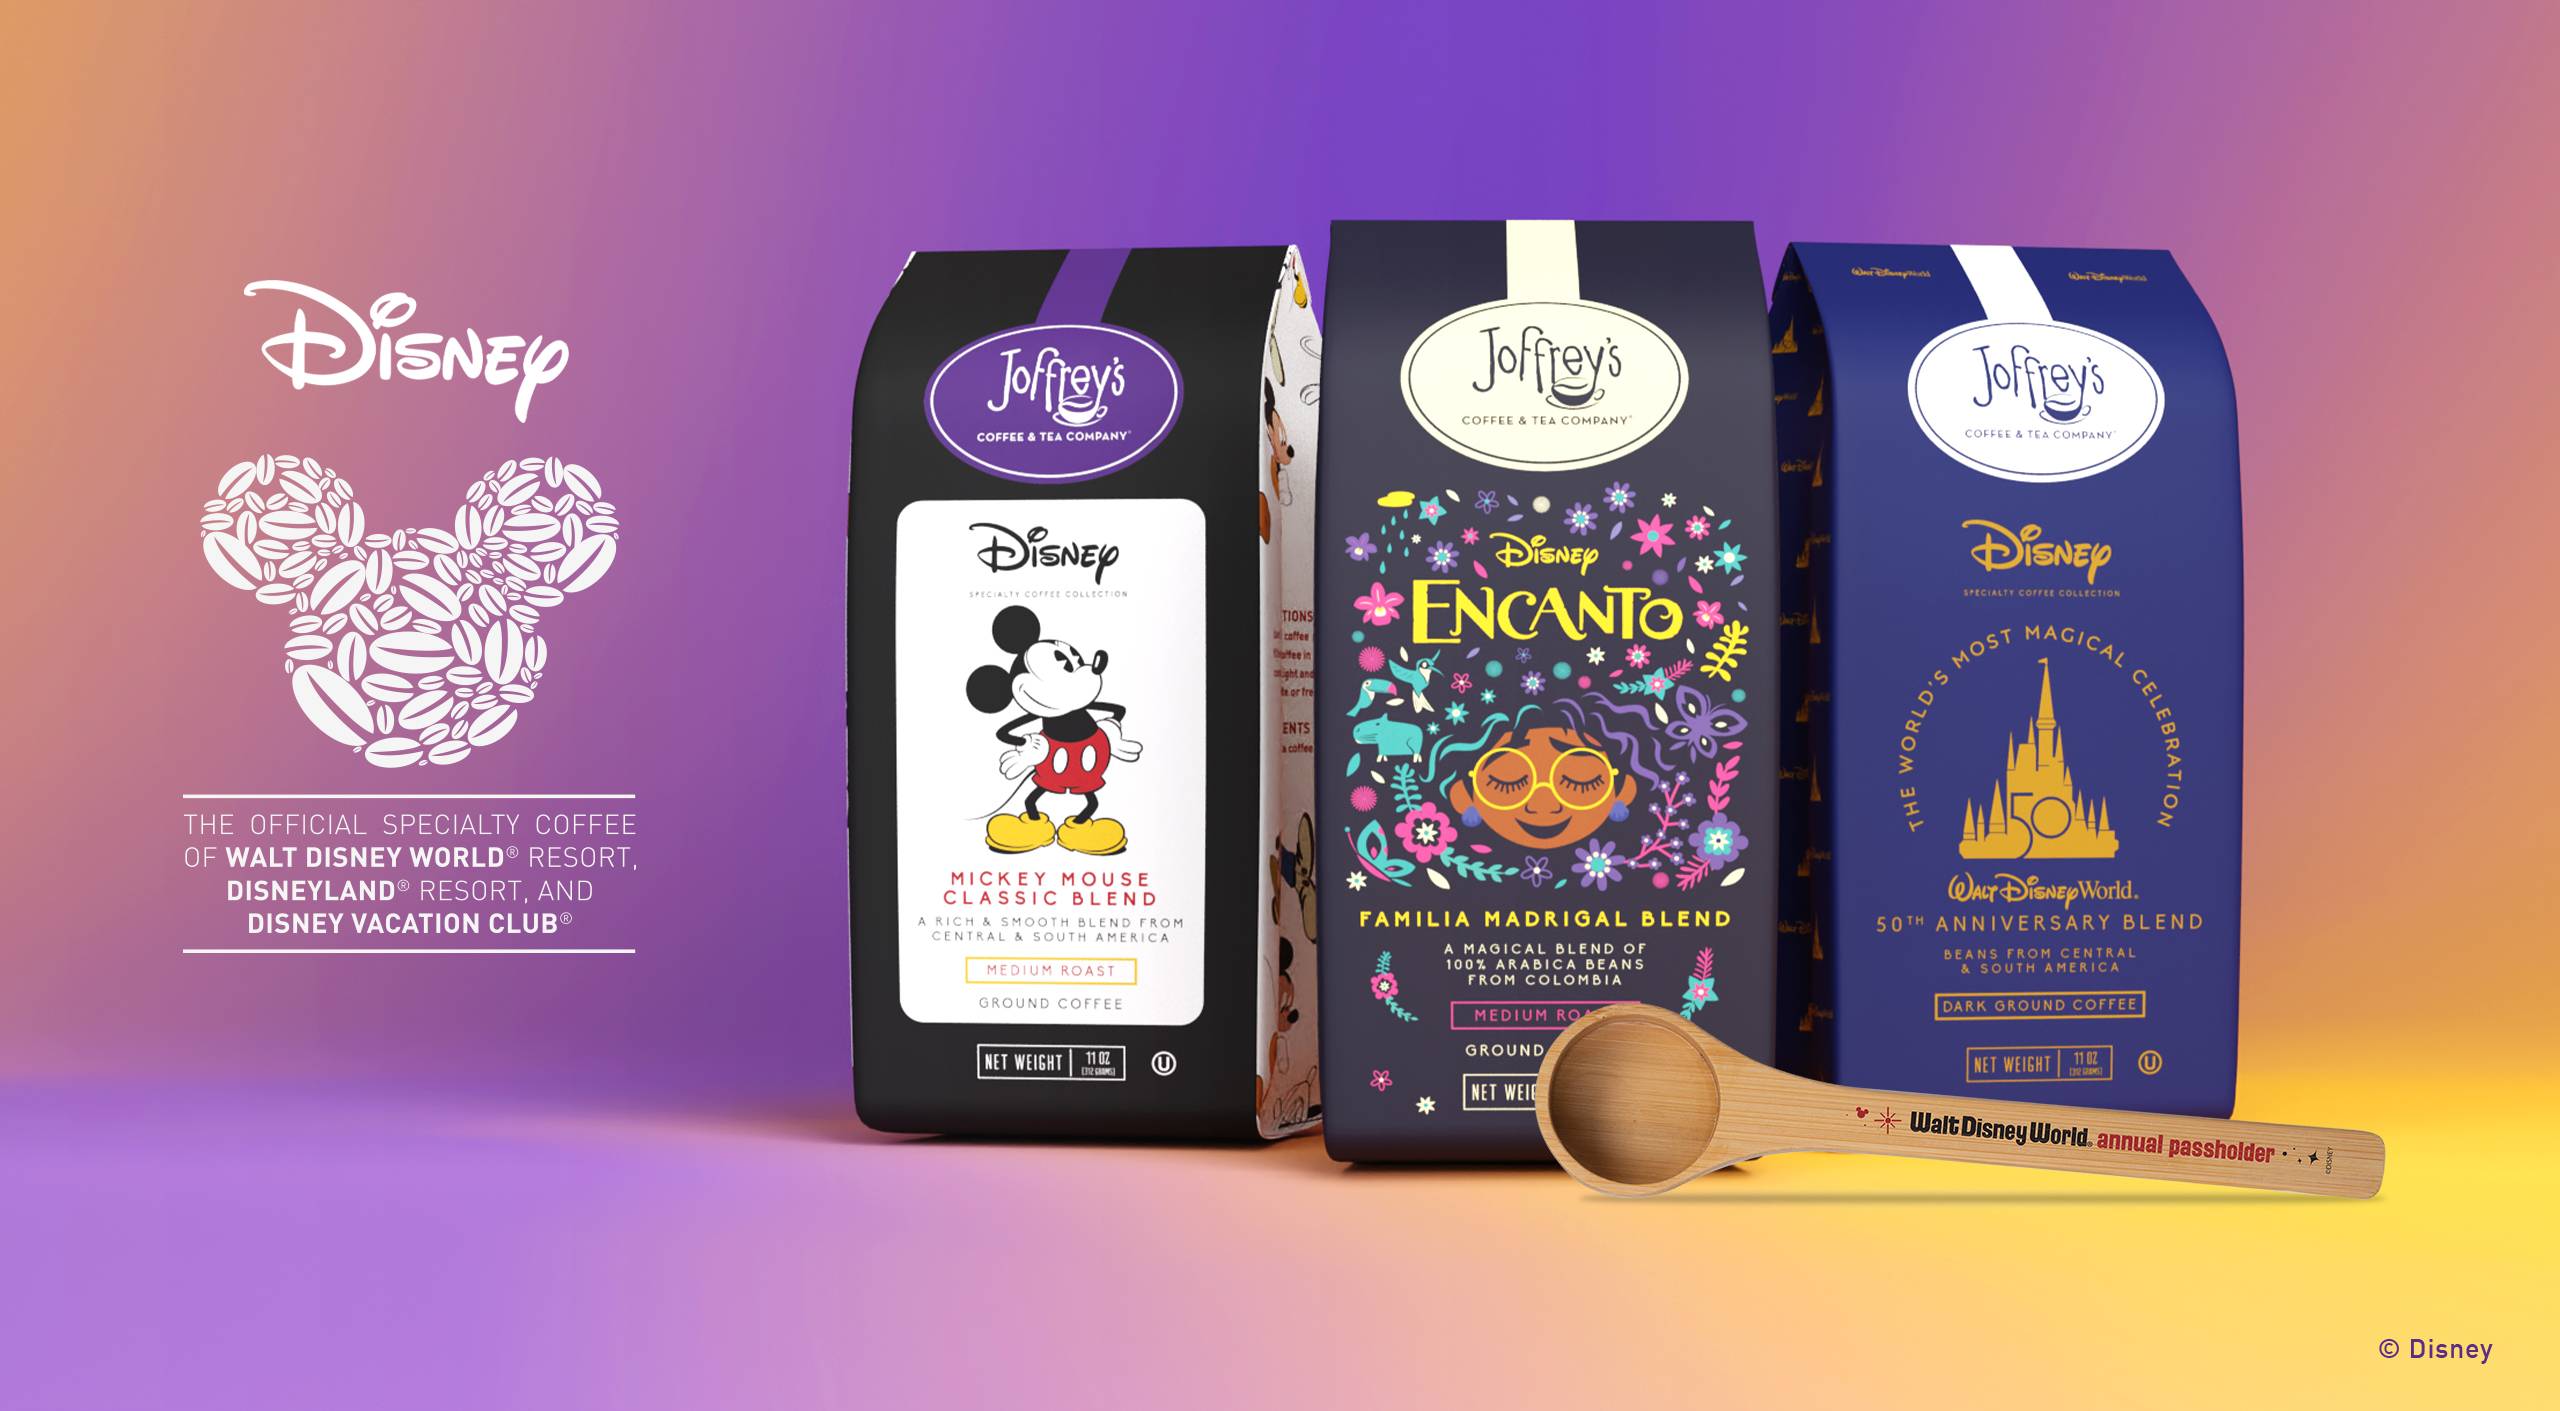 Complimentary Joffery's Coffee Scoop for Walt Disney World Annual Passholders